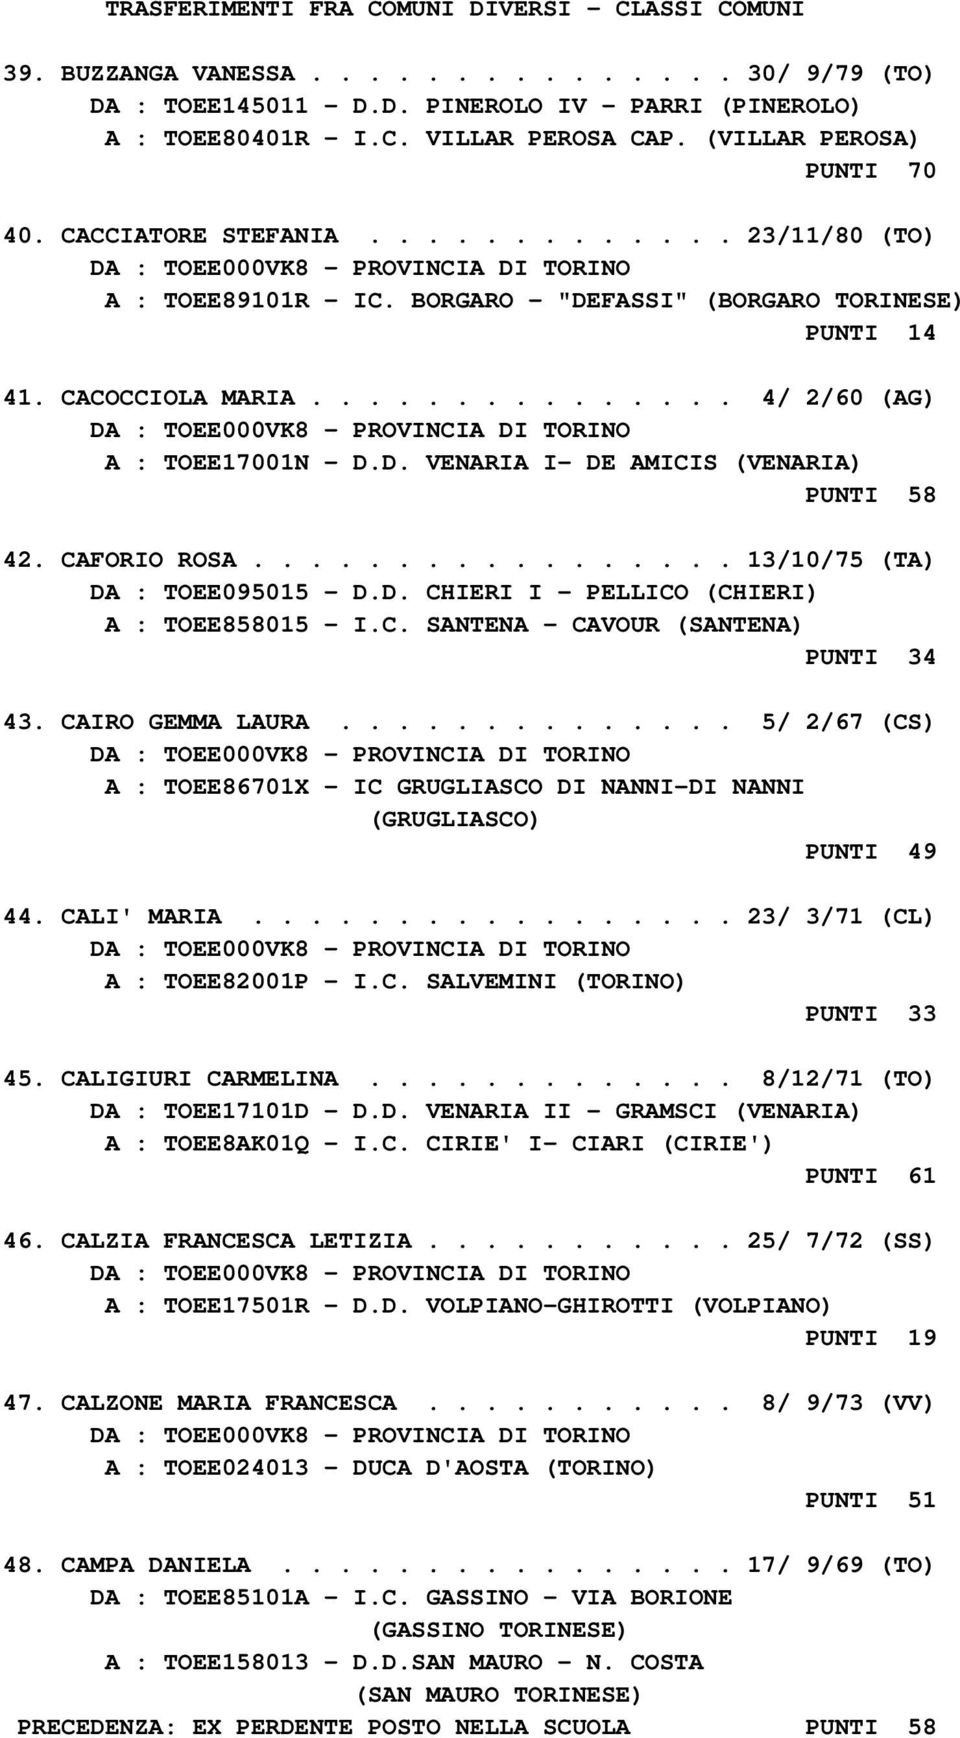 D. VENARIA I- DE AMICIS (VENARIA) PUNTI 58 42. CAFORIO ROSA................. 13/10/75 (TA) DA : TOEE095015 - D.D. CHIERI I - PELLICO (CHIERI) A : TOEE858015 - I.C. SANTENA - CAVOUR (SANTENA) PUNTI 34 43.